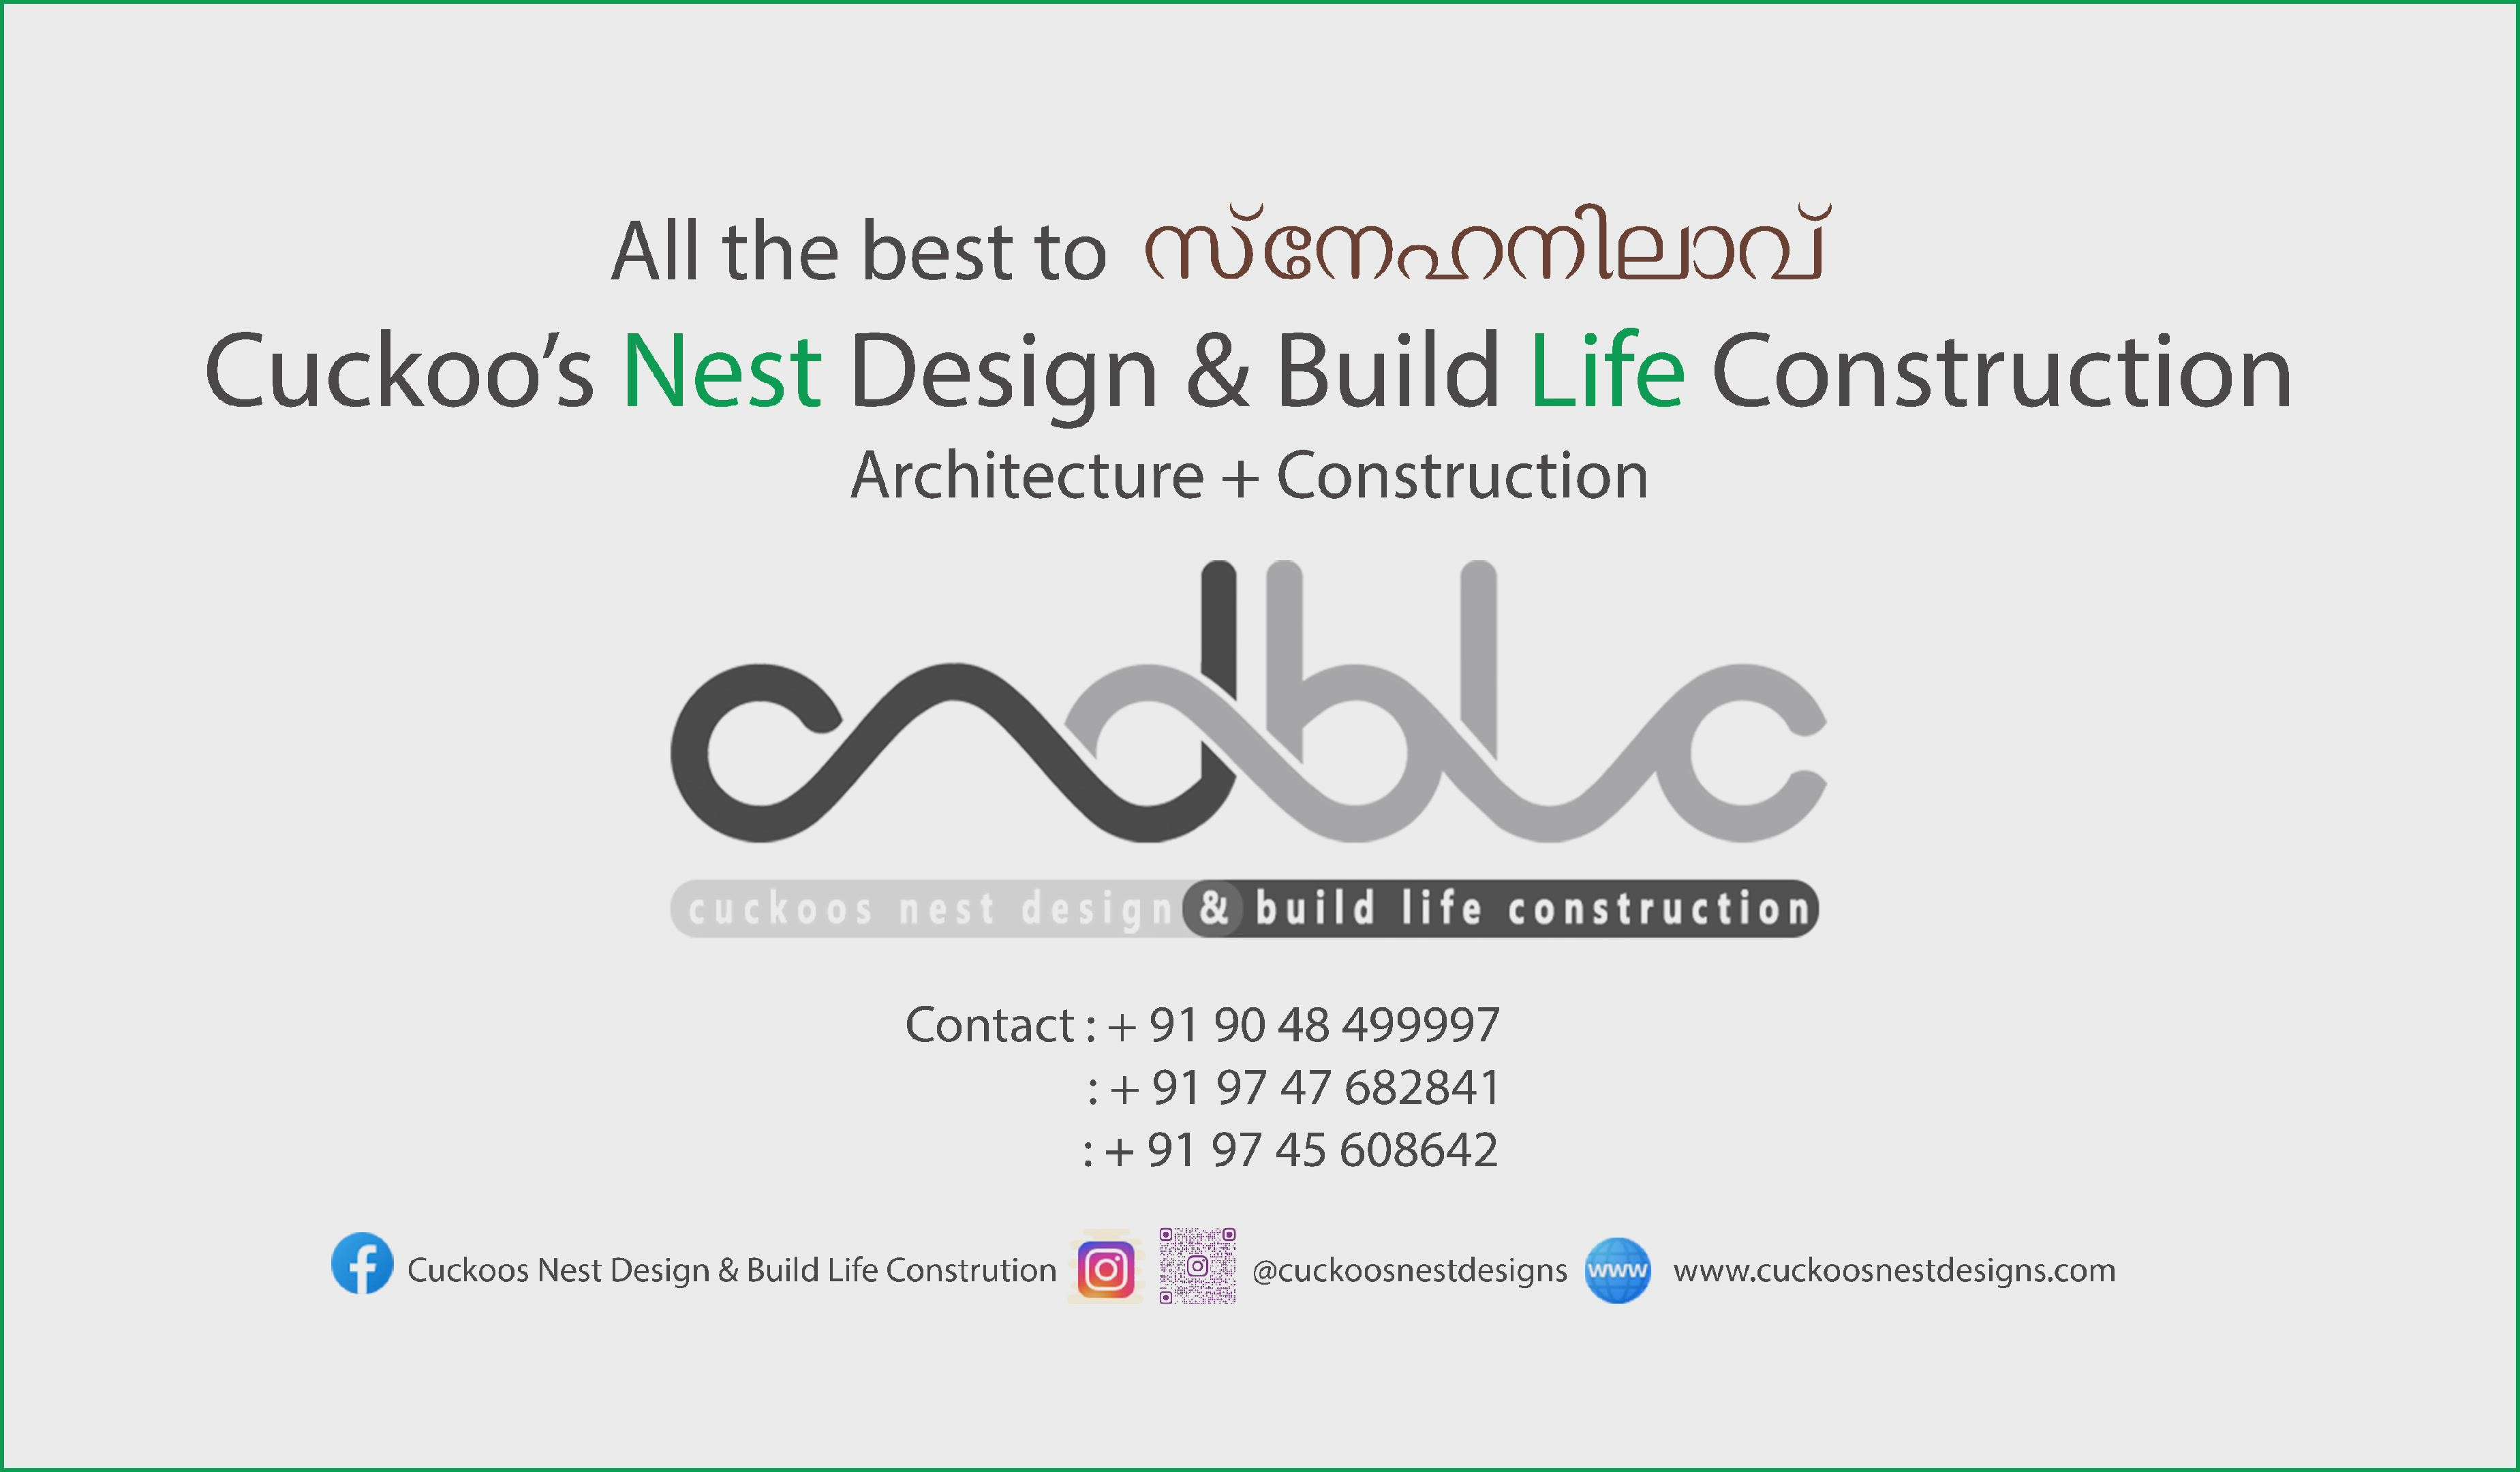 CND BLC
  #HouseConstruction 
 #Buildingconstruction 
 #Designs 
 #Architectural&Interior  #architecturedesigns